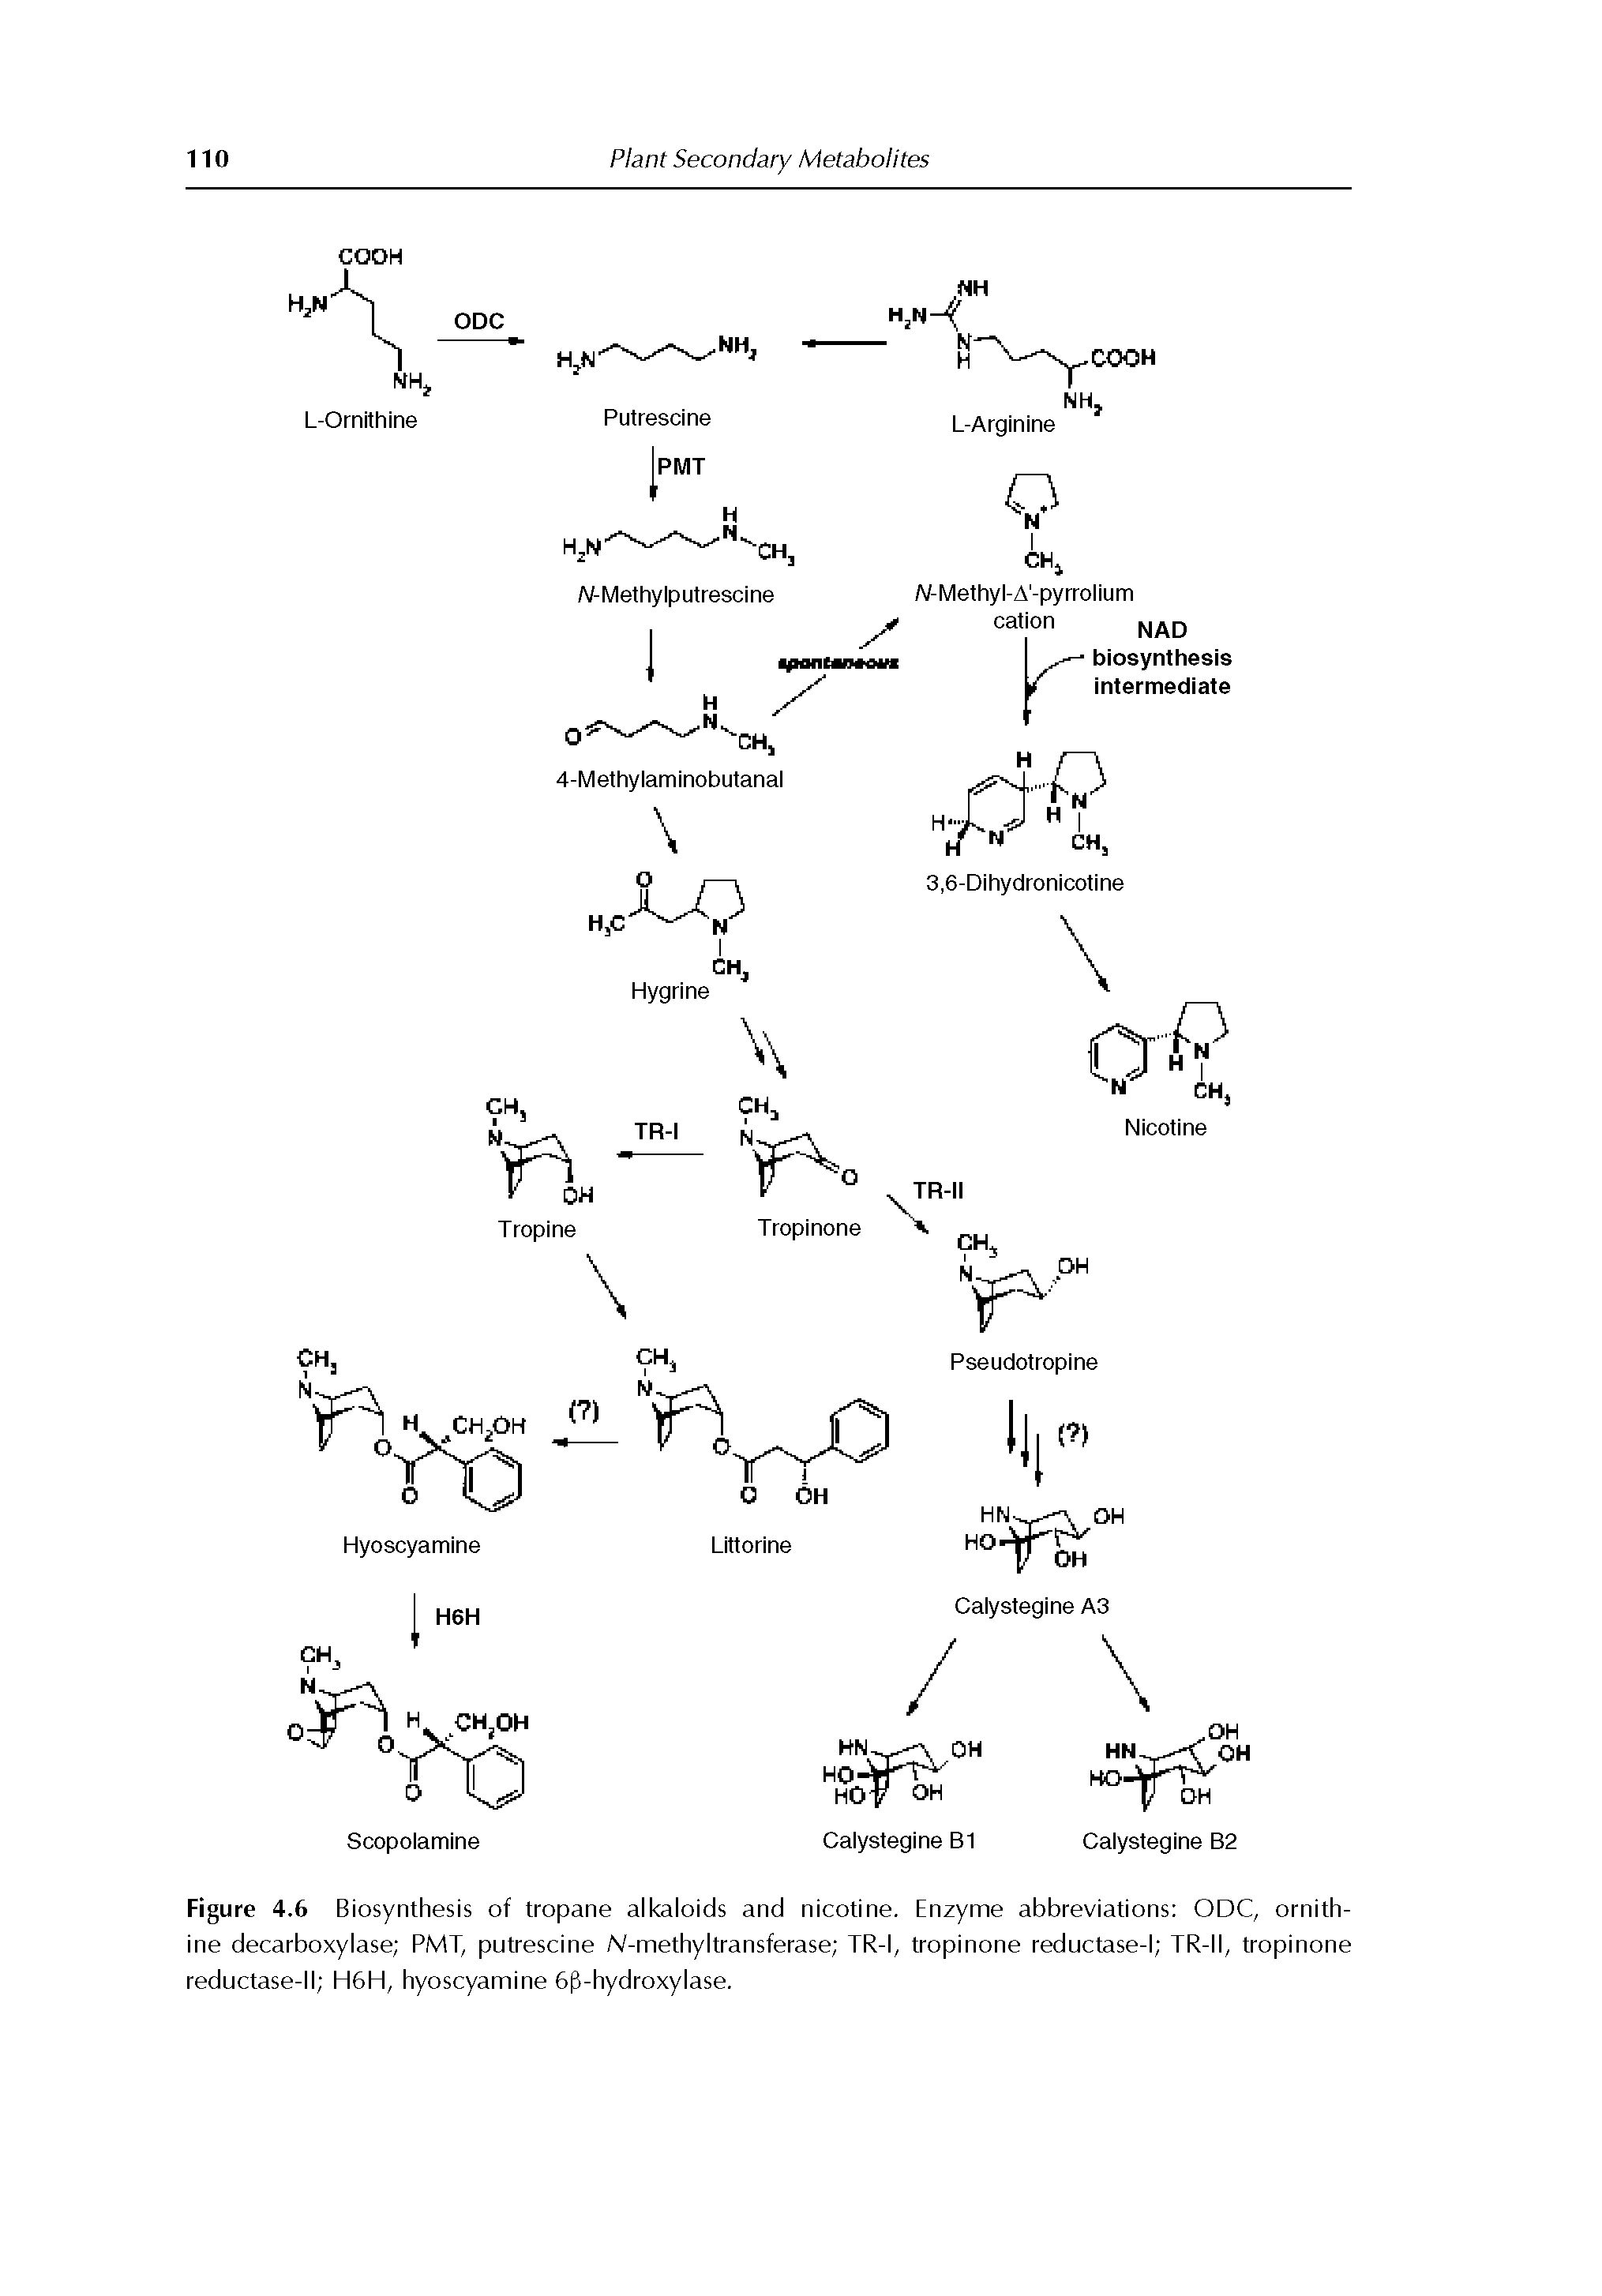 Figure 4.6 Biosynthesis of tropane alkaloids and nicotine. Enzyme abbreviations ODC, ornithine decarboxylase PMT, putrescine N-methyltransferase TR-i, tropinone reductase-i TR-ii, tropinone reductase-ii EHGiH, hyoscyamine 6f -hydroxylase.